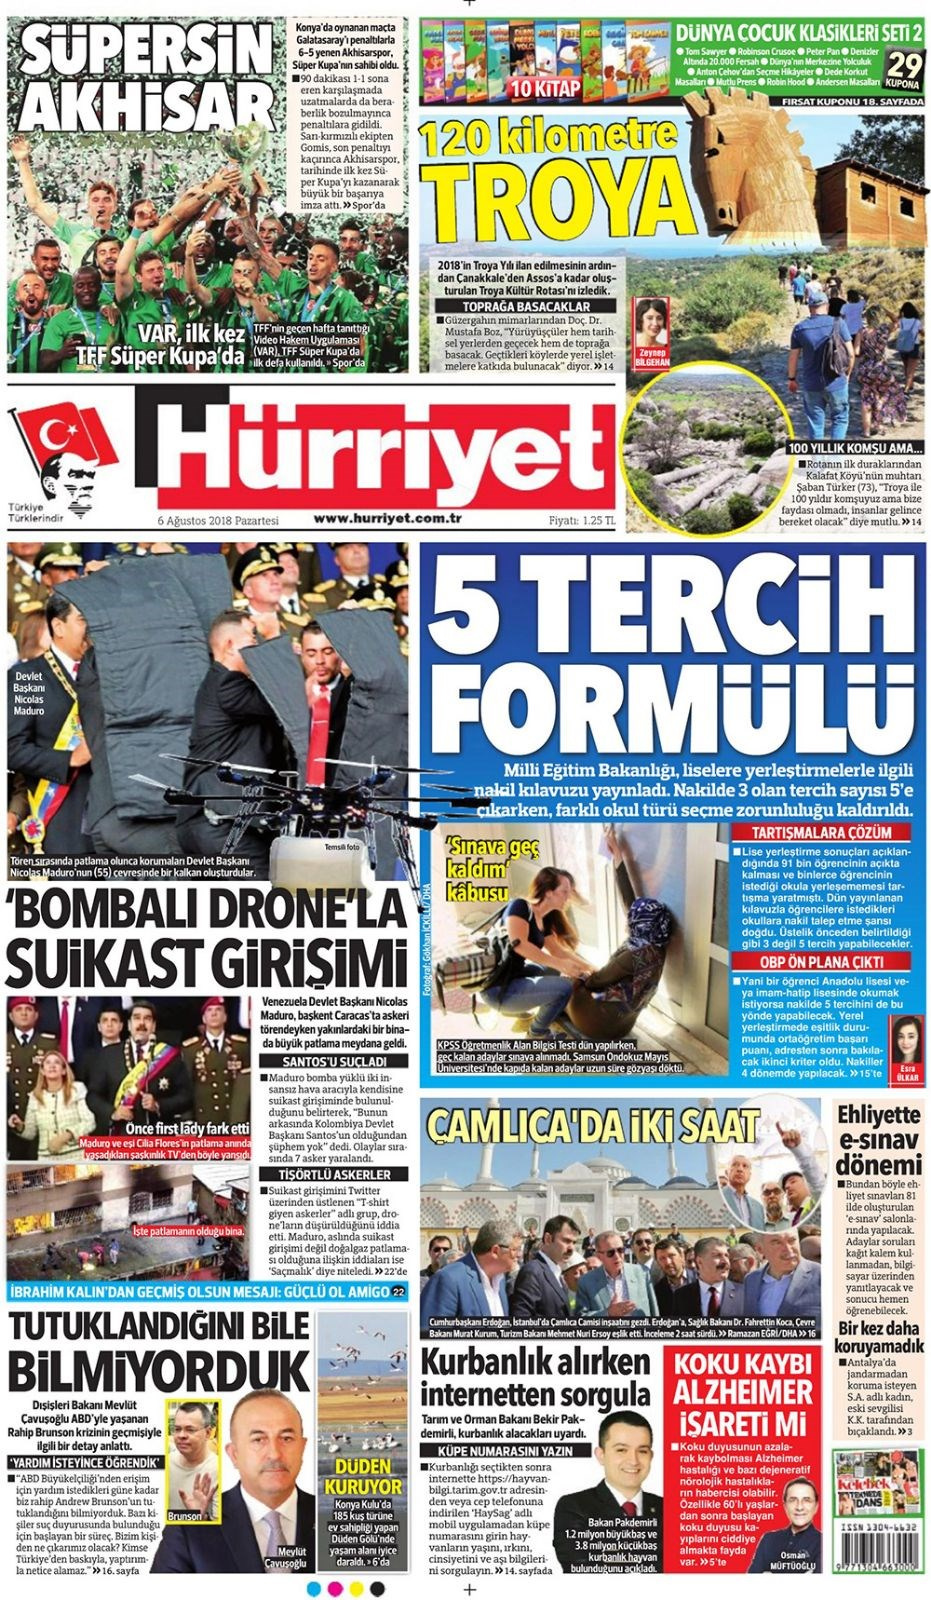 Gazete manşetleri 6 Ağustos 2018 Hürriyet - Posta - Sabah